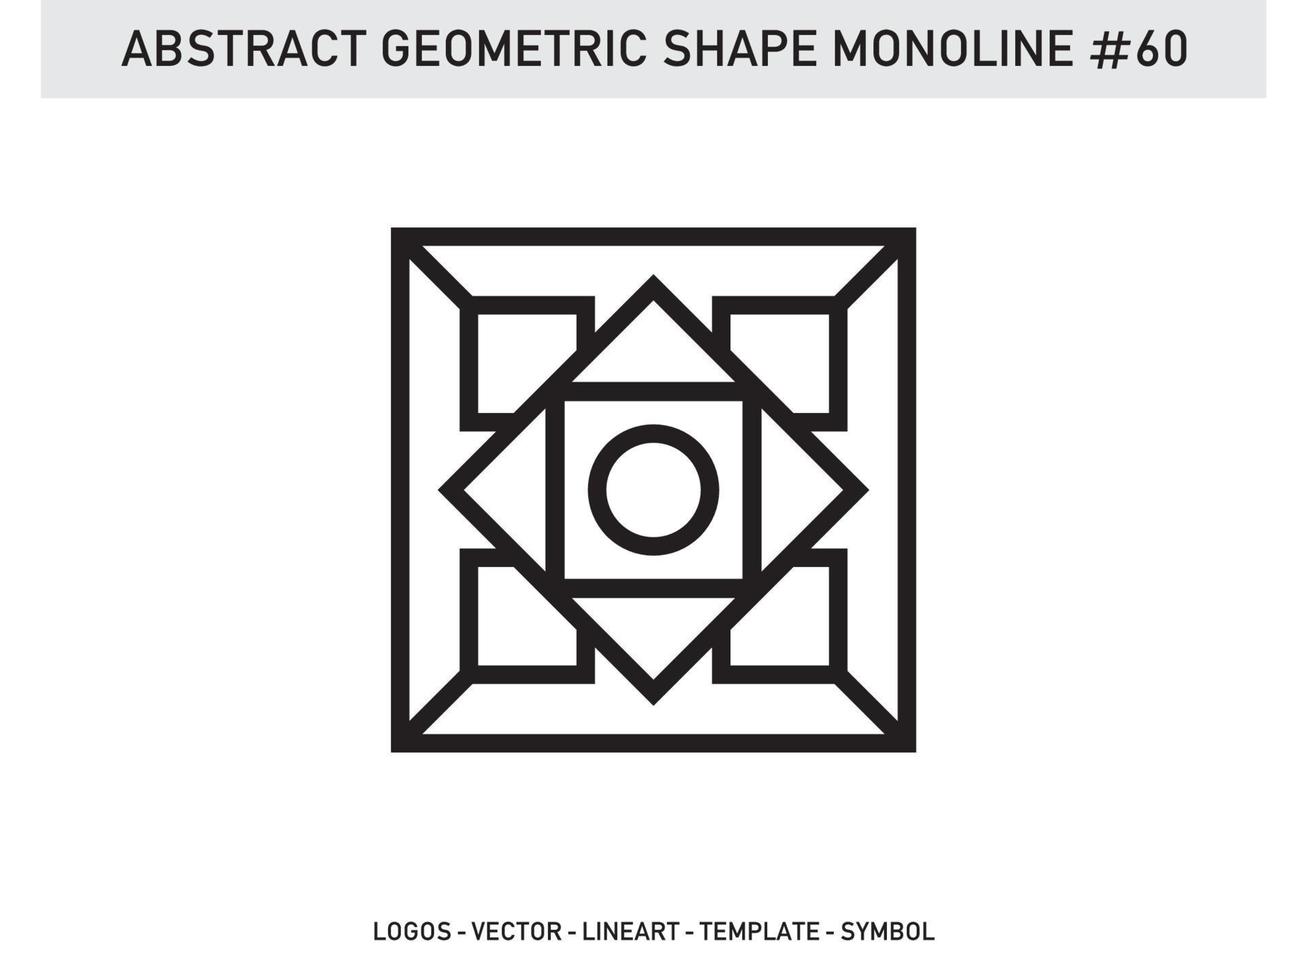 vetor livre abstrato de forma geométrica monoline